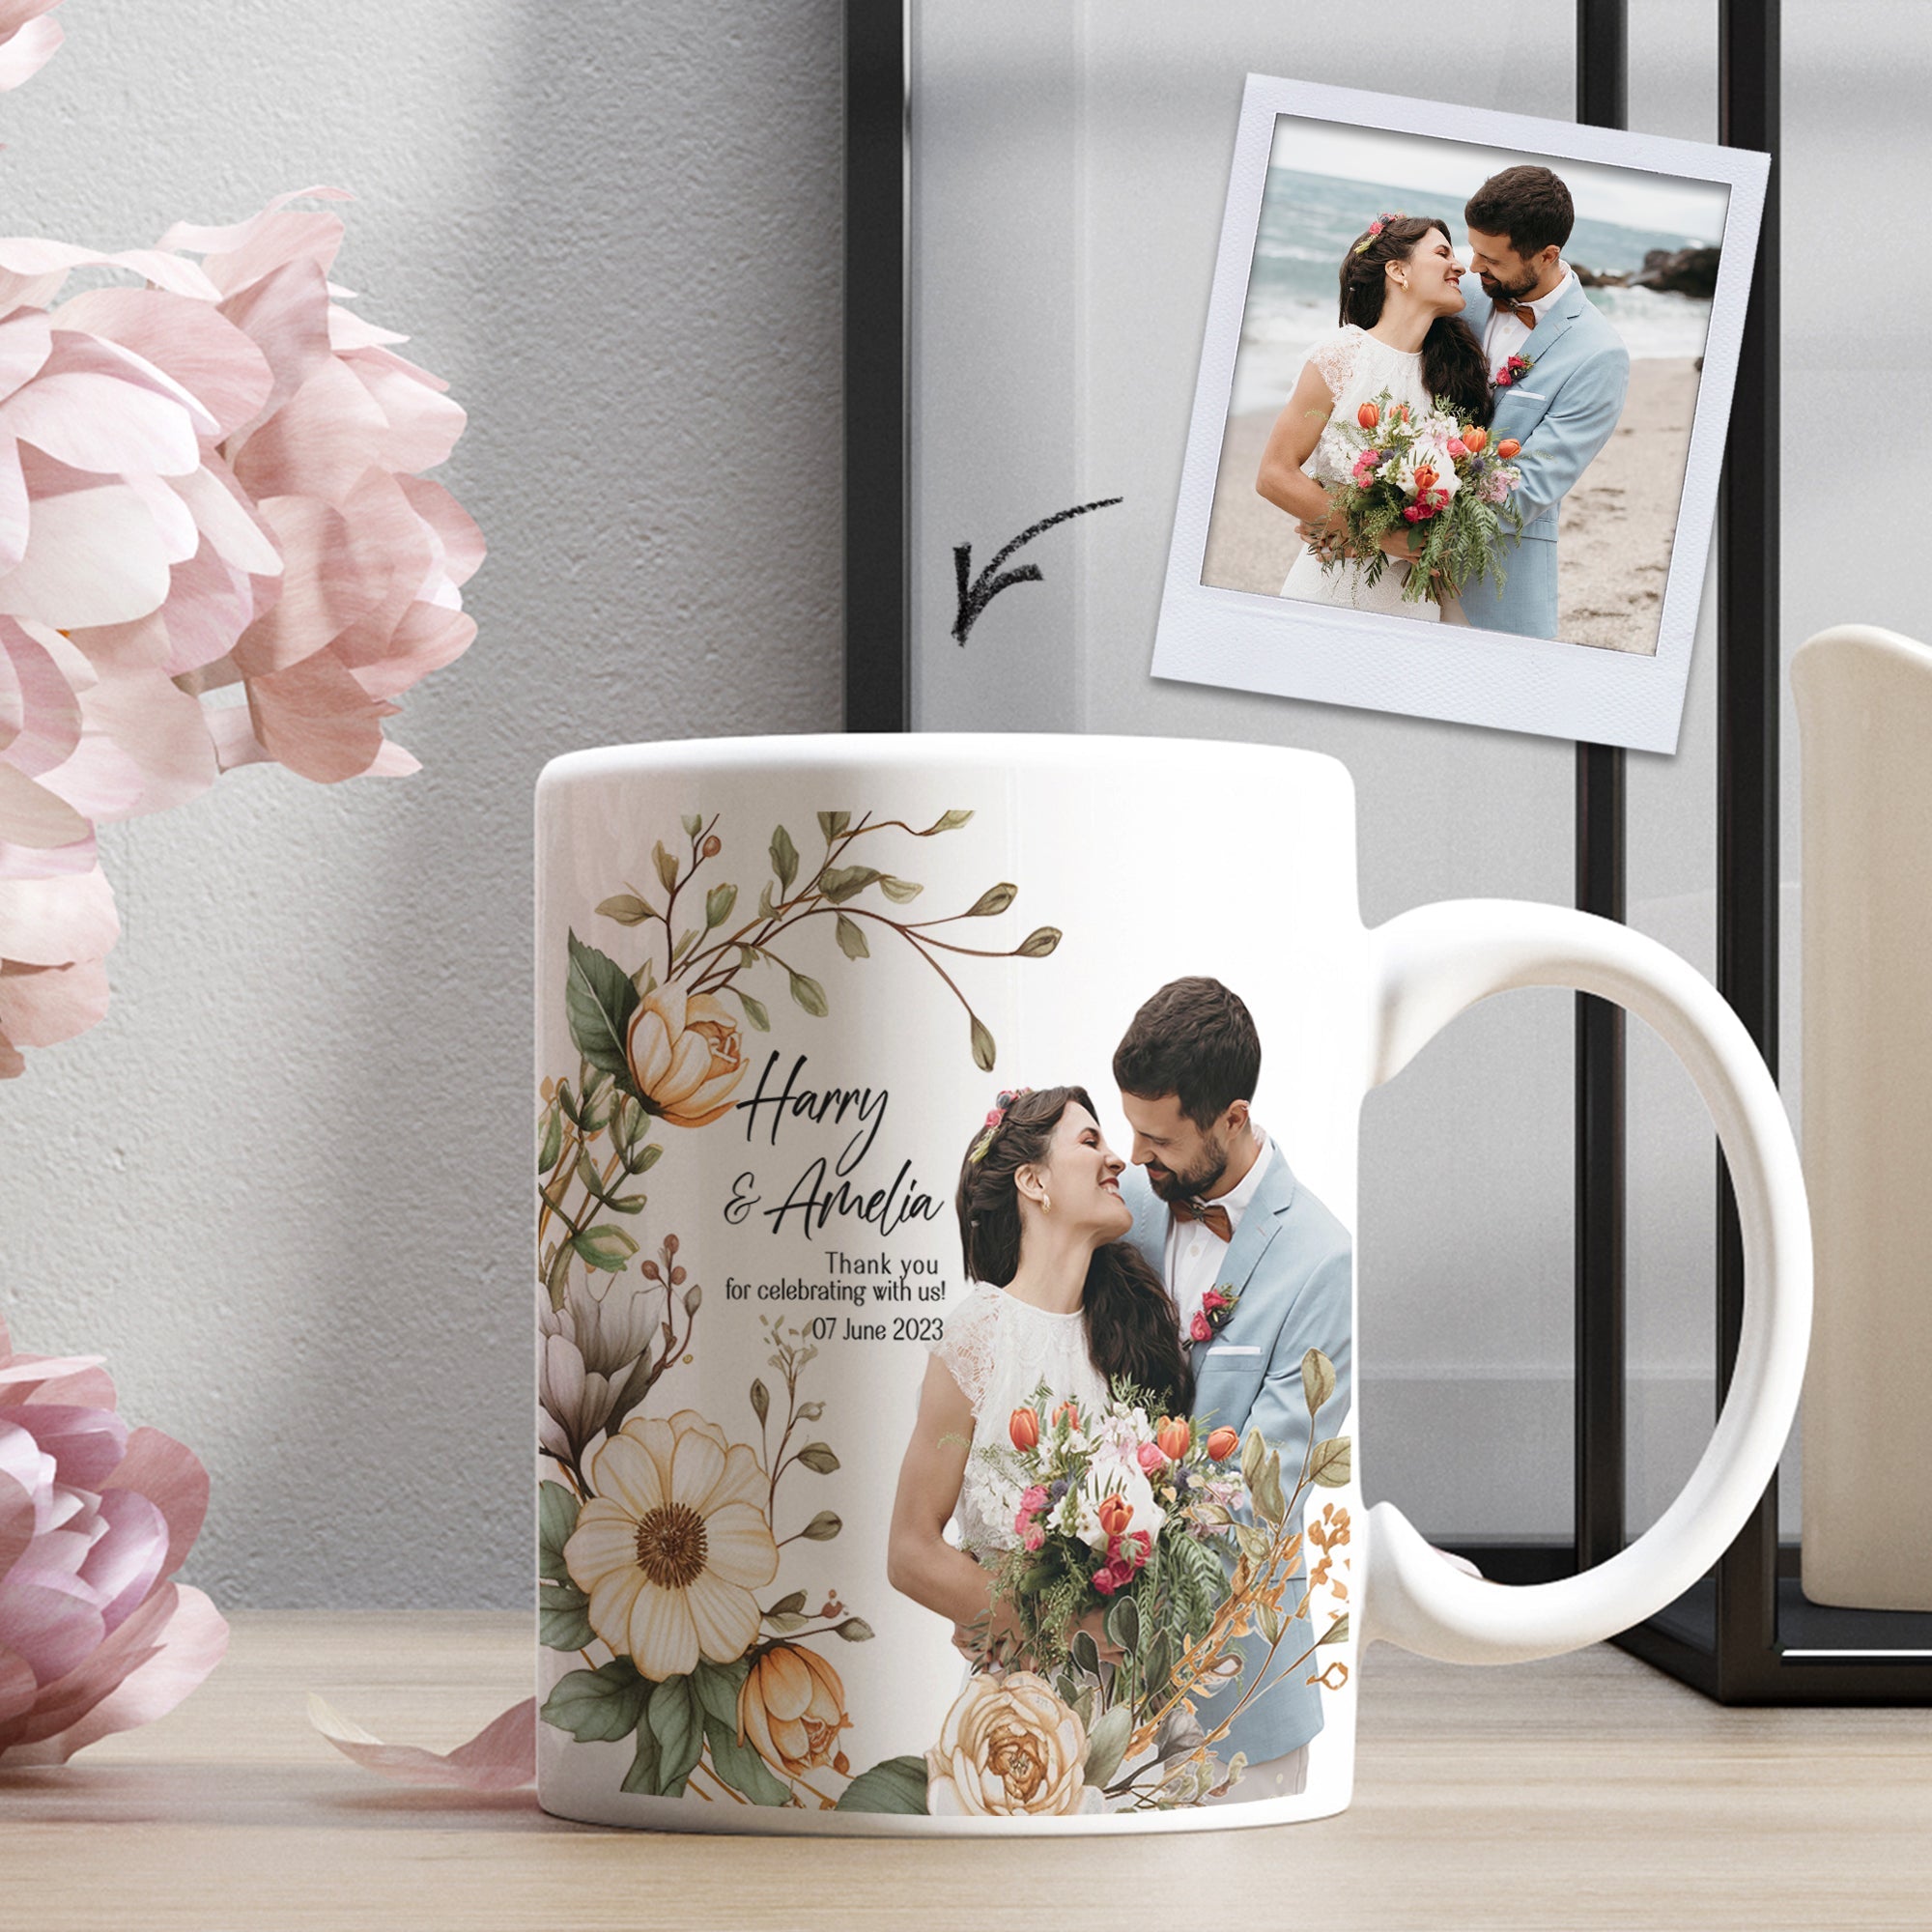 Custom Coffee Mugs - Bulk Order for Wedding gifts, Events &amp; Logos - cmzart